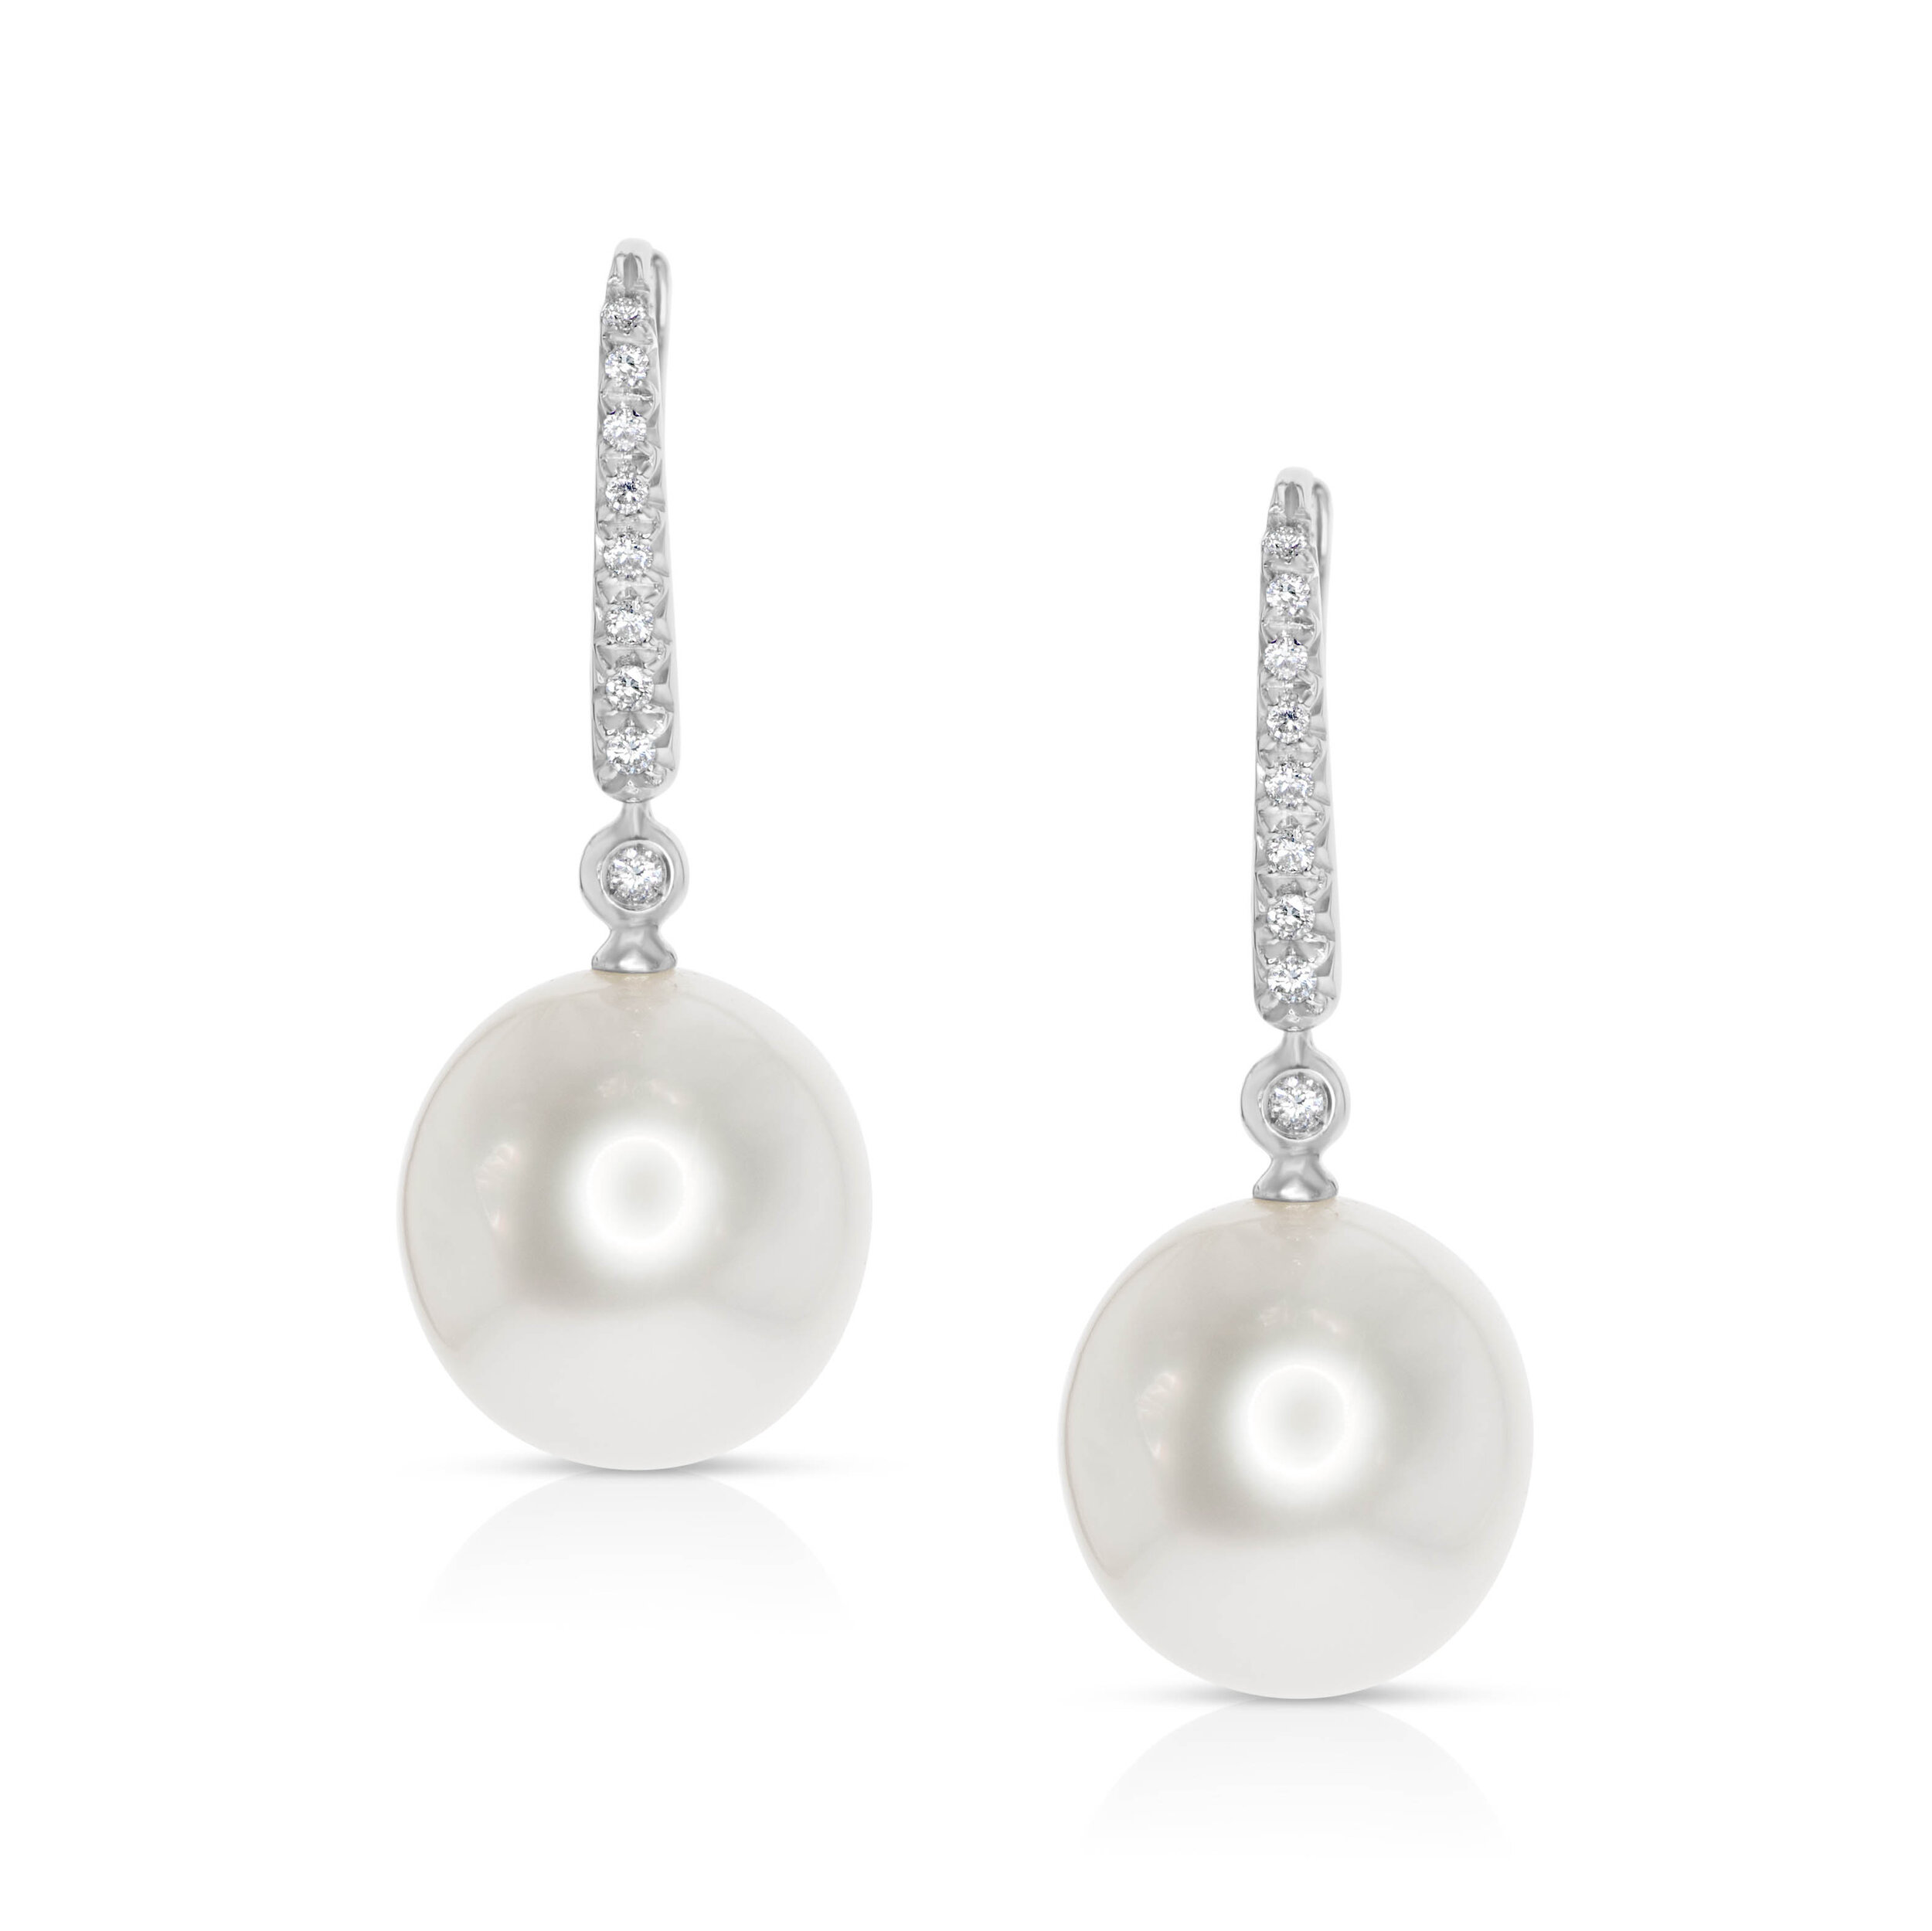 Update more than 72 white gold drop earrings australia best - 3tdesign ...